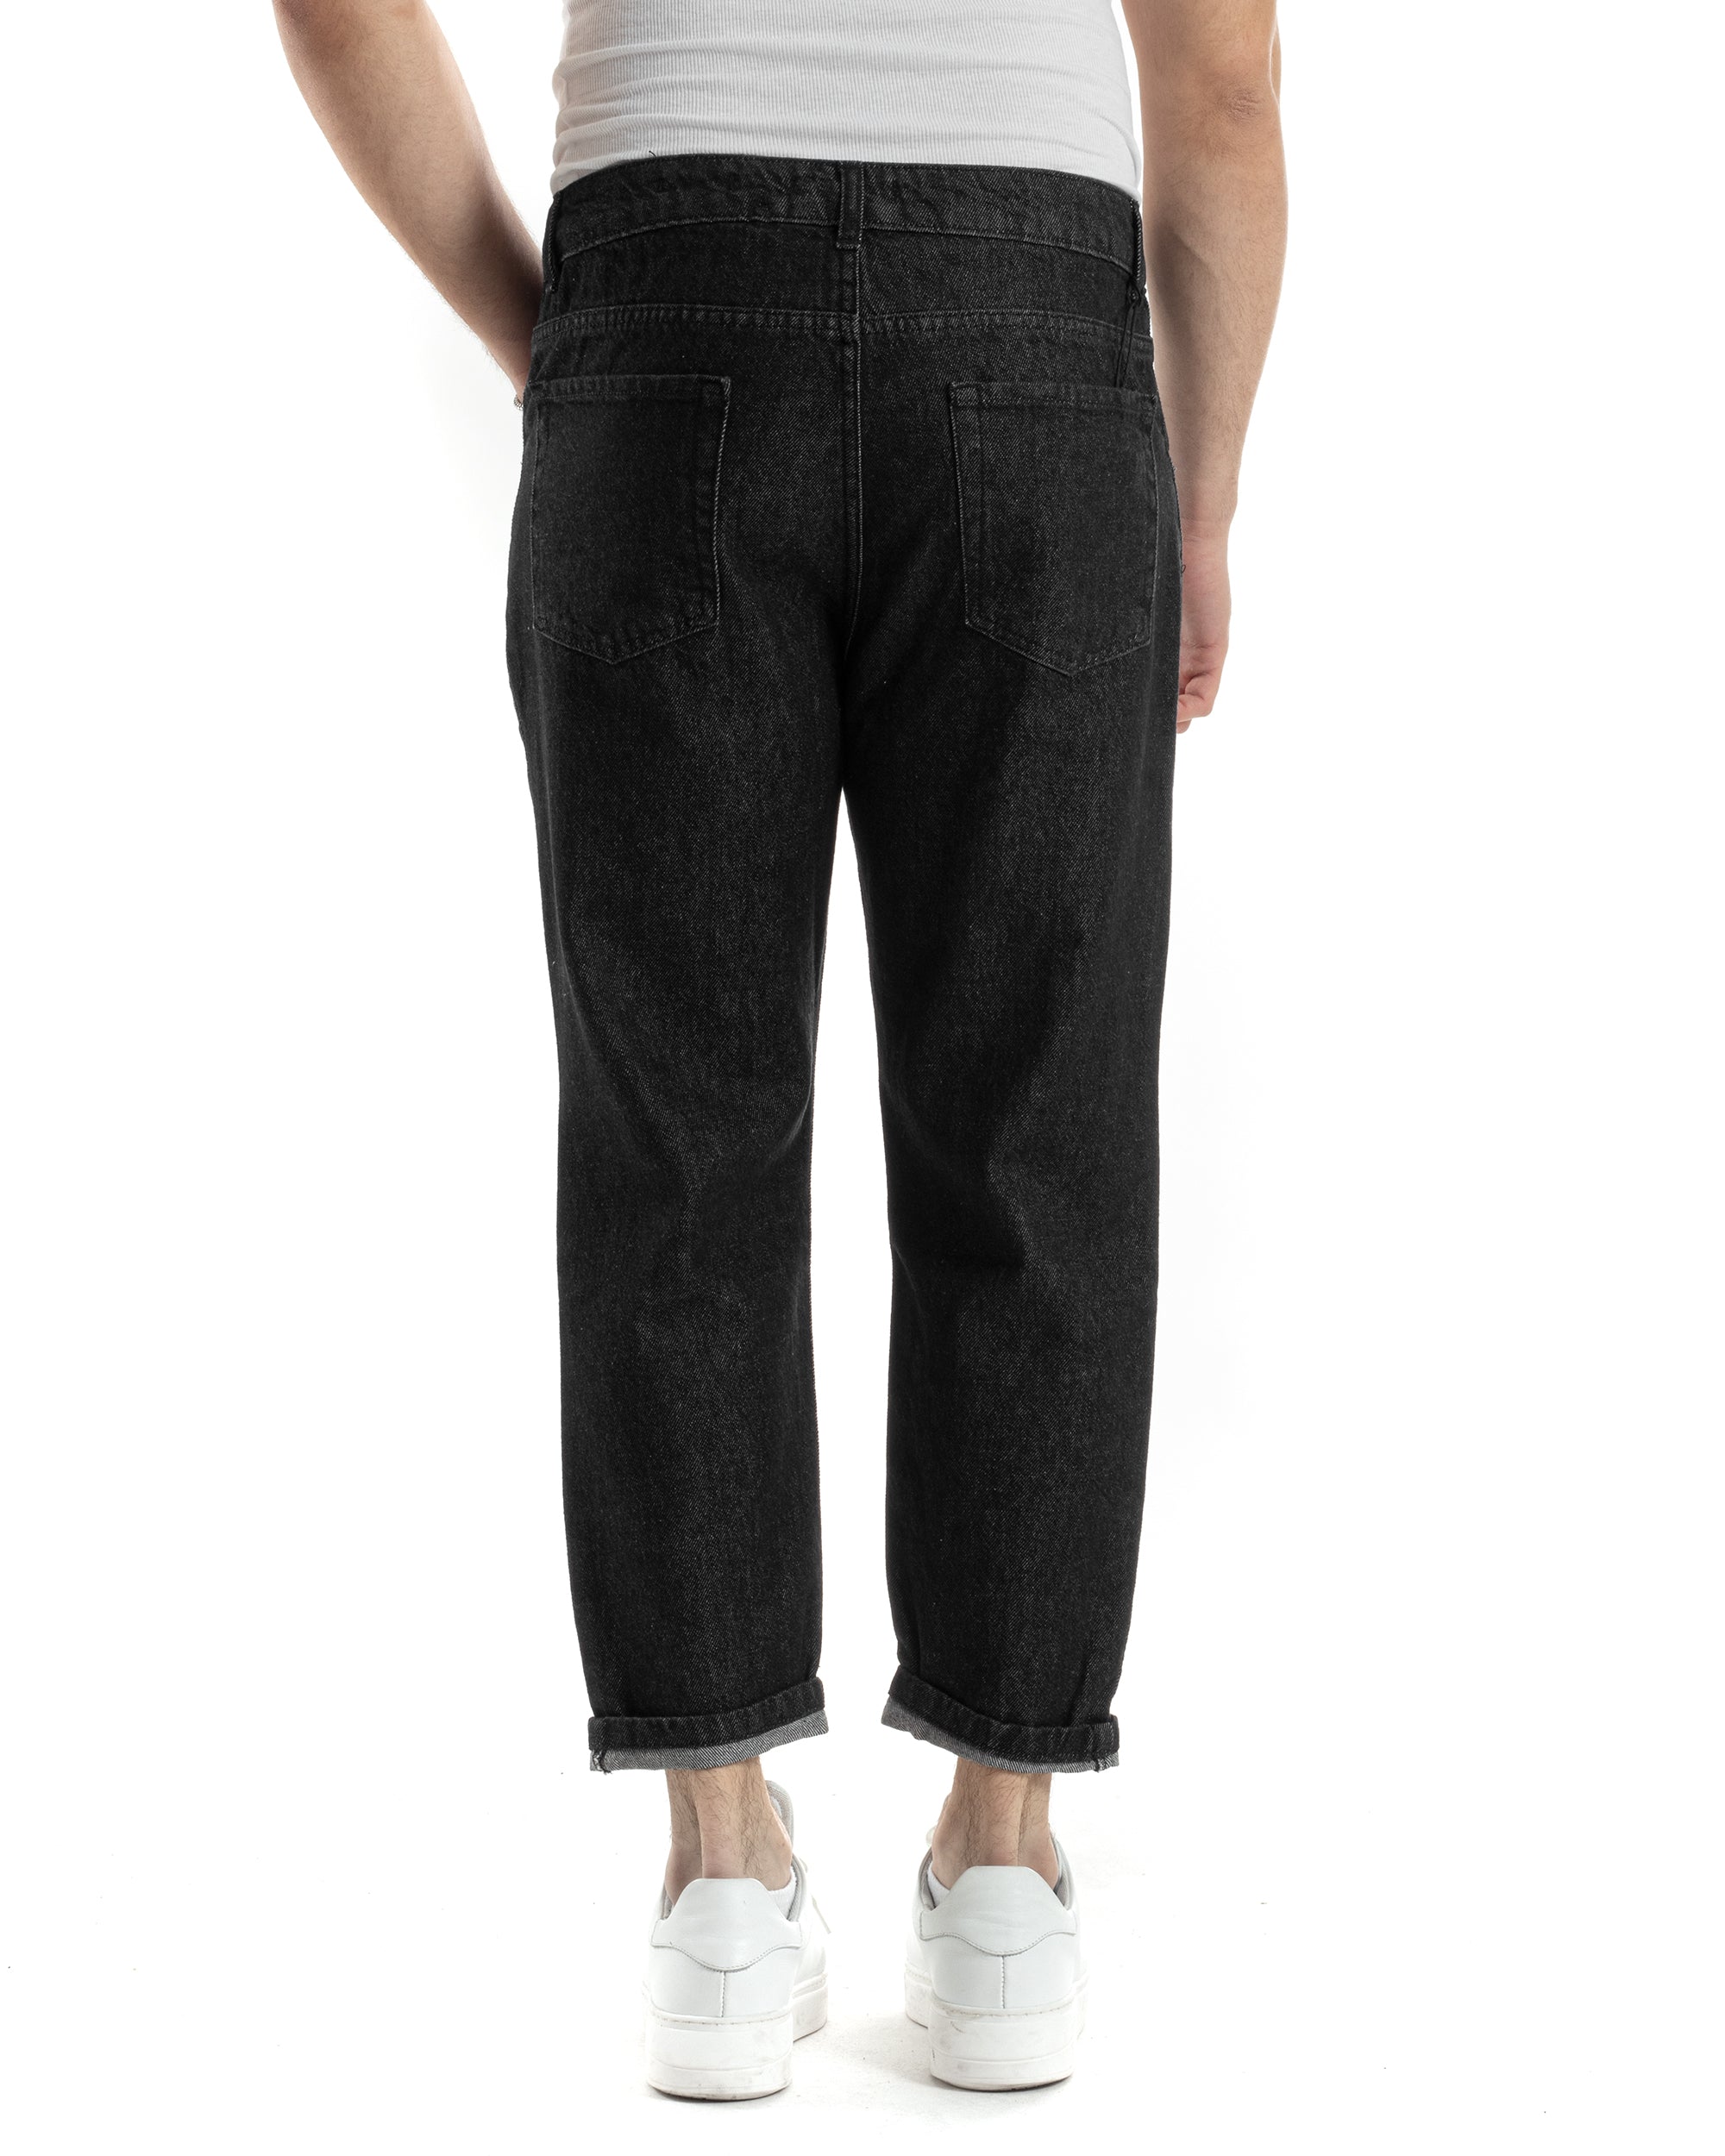 Pantaloni Jeans Uomo Straight Fit Taglio Al Ginocchio Denim Stonewashed Nero GIOSAL-JS1019A